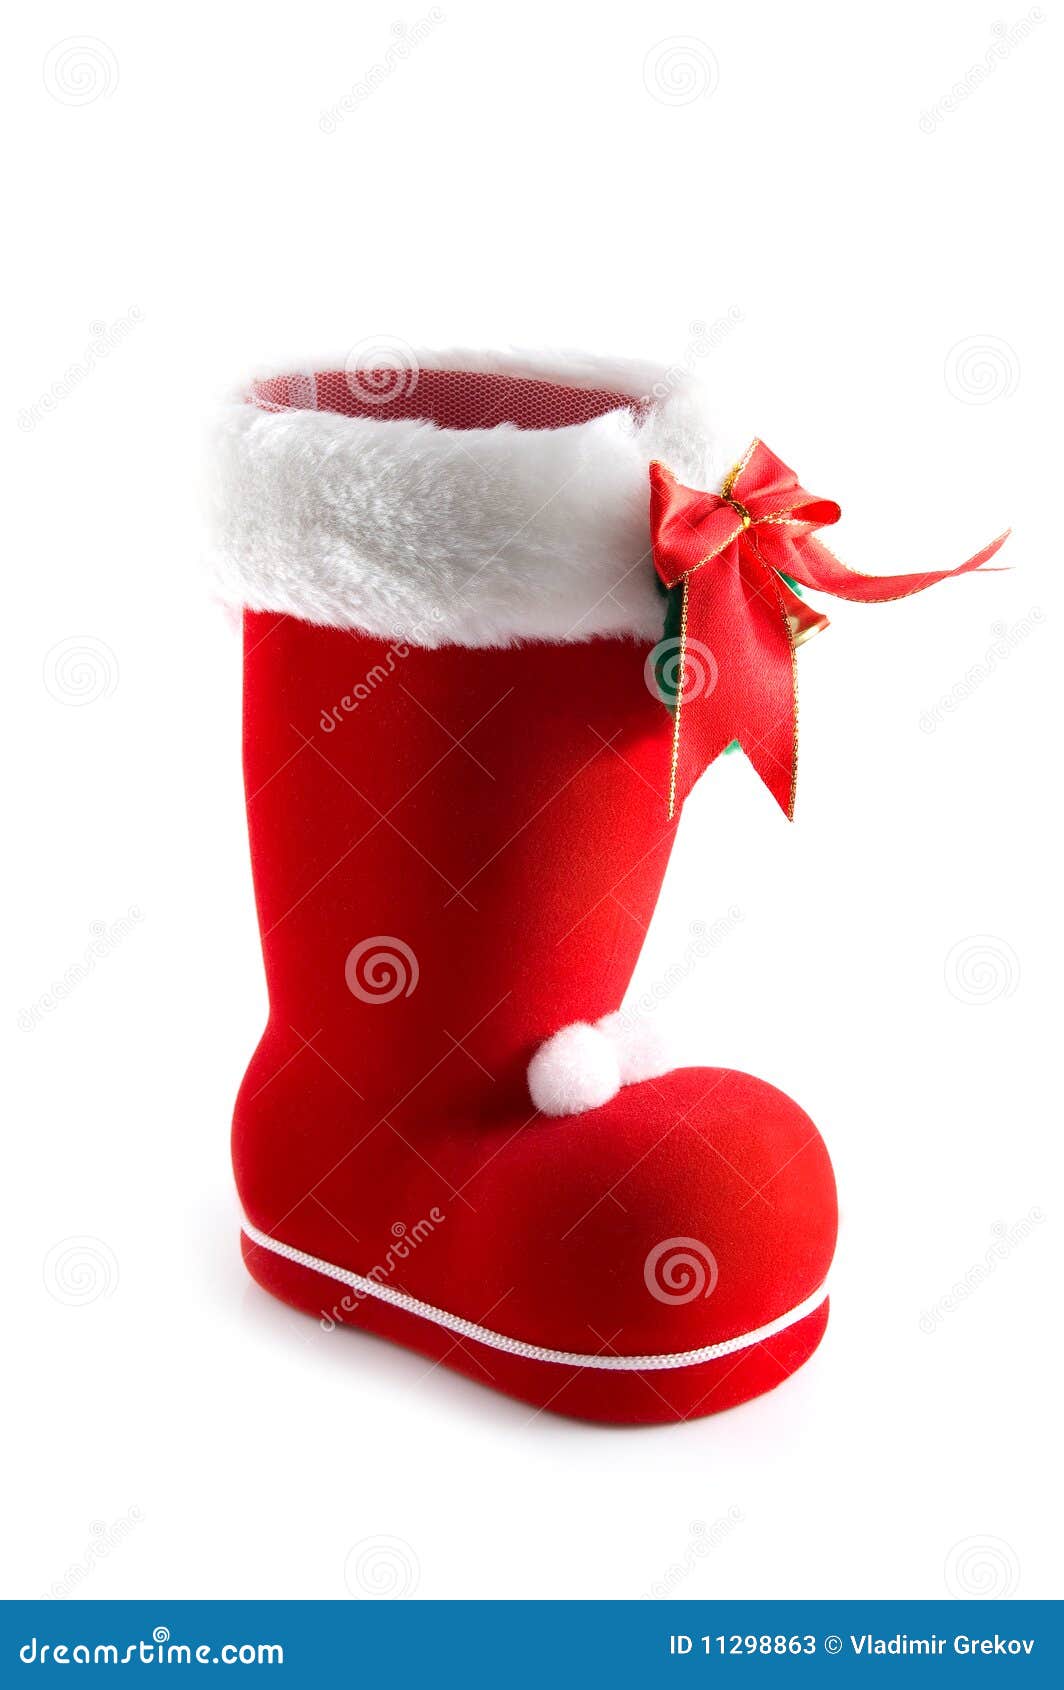 Christmas boot stock image. Image of celebration, boots - 11298863